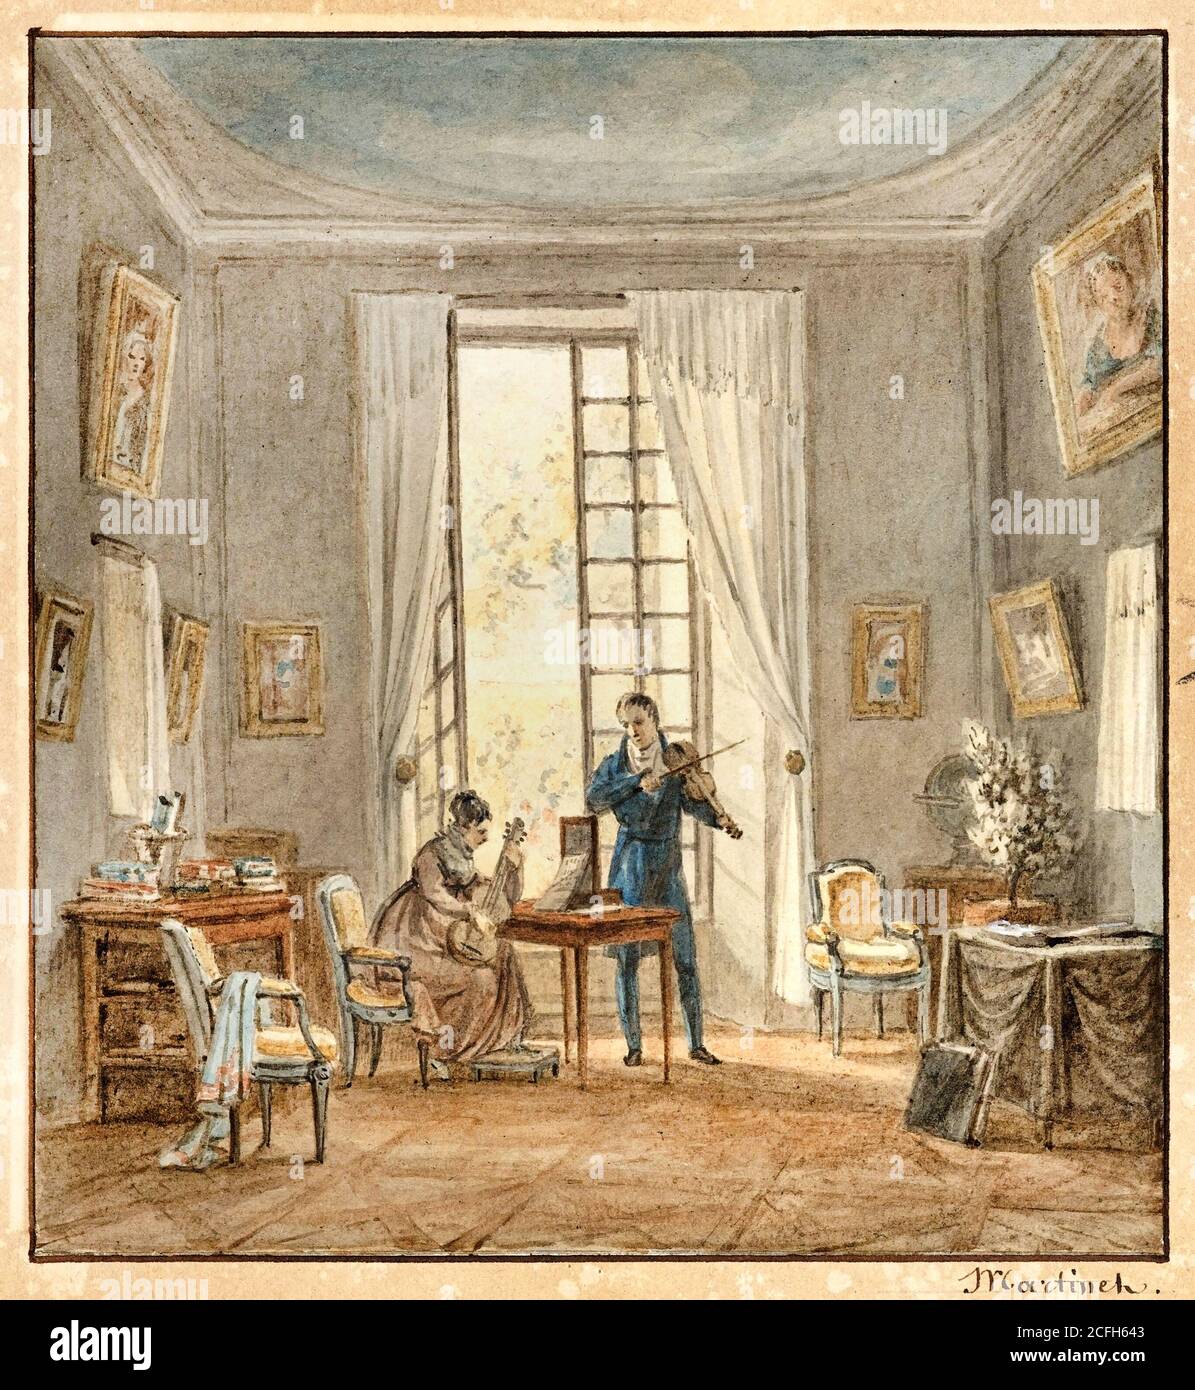 Achille-Louis Martinet, Salon Interior mit Gabriel d'Arjuzon als Geige und Pascalie Hosten, Comtess d'Arjuzon, Gitarre spielen, um 1840, B Stockfoto